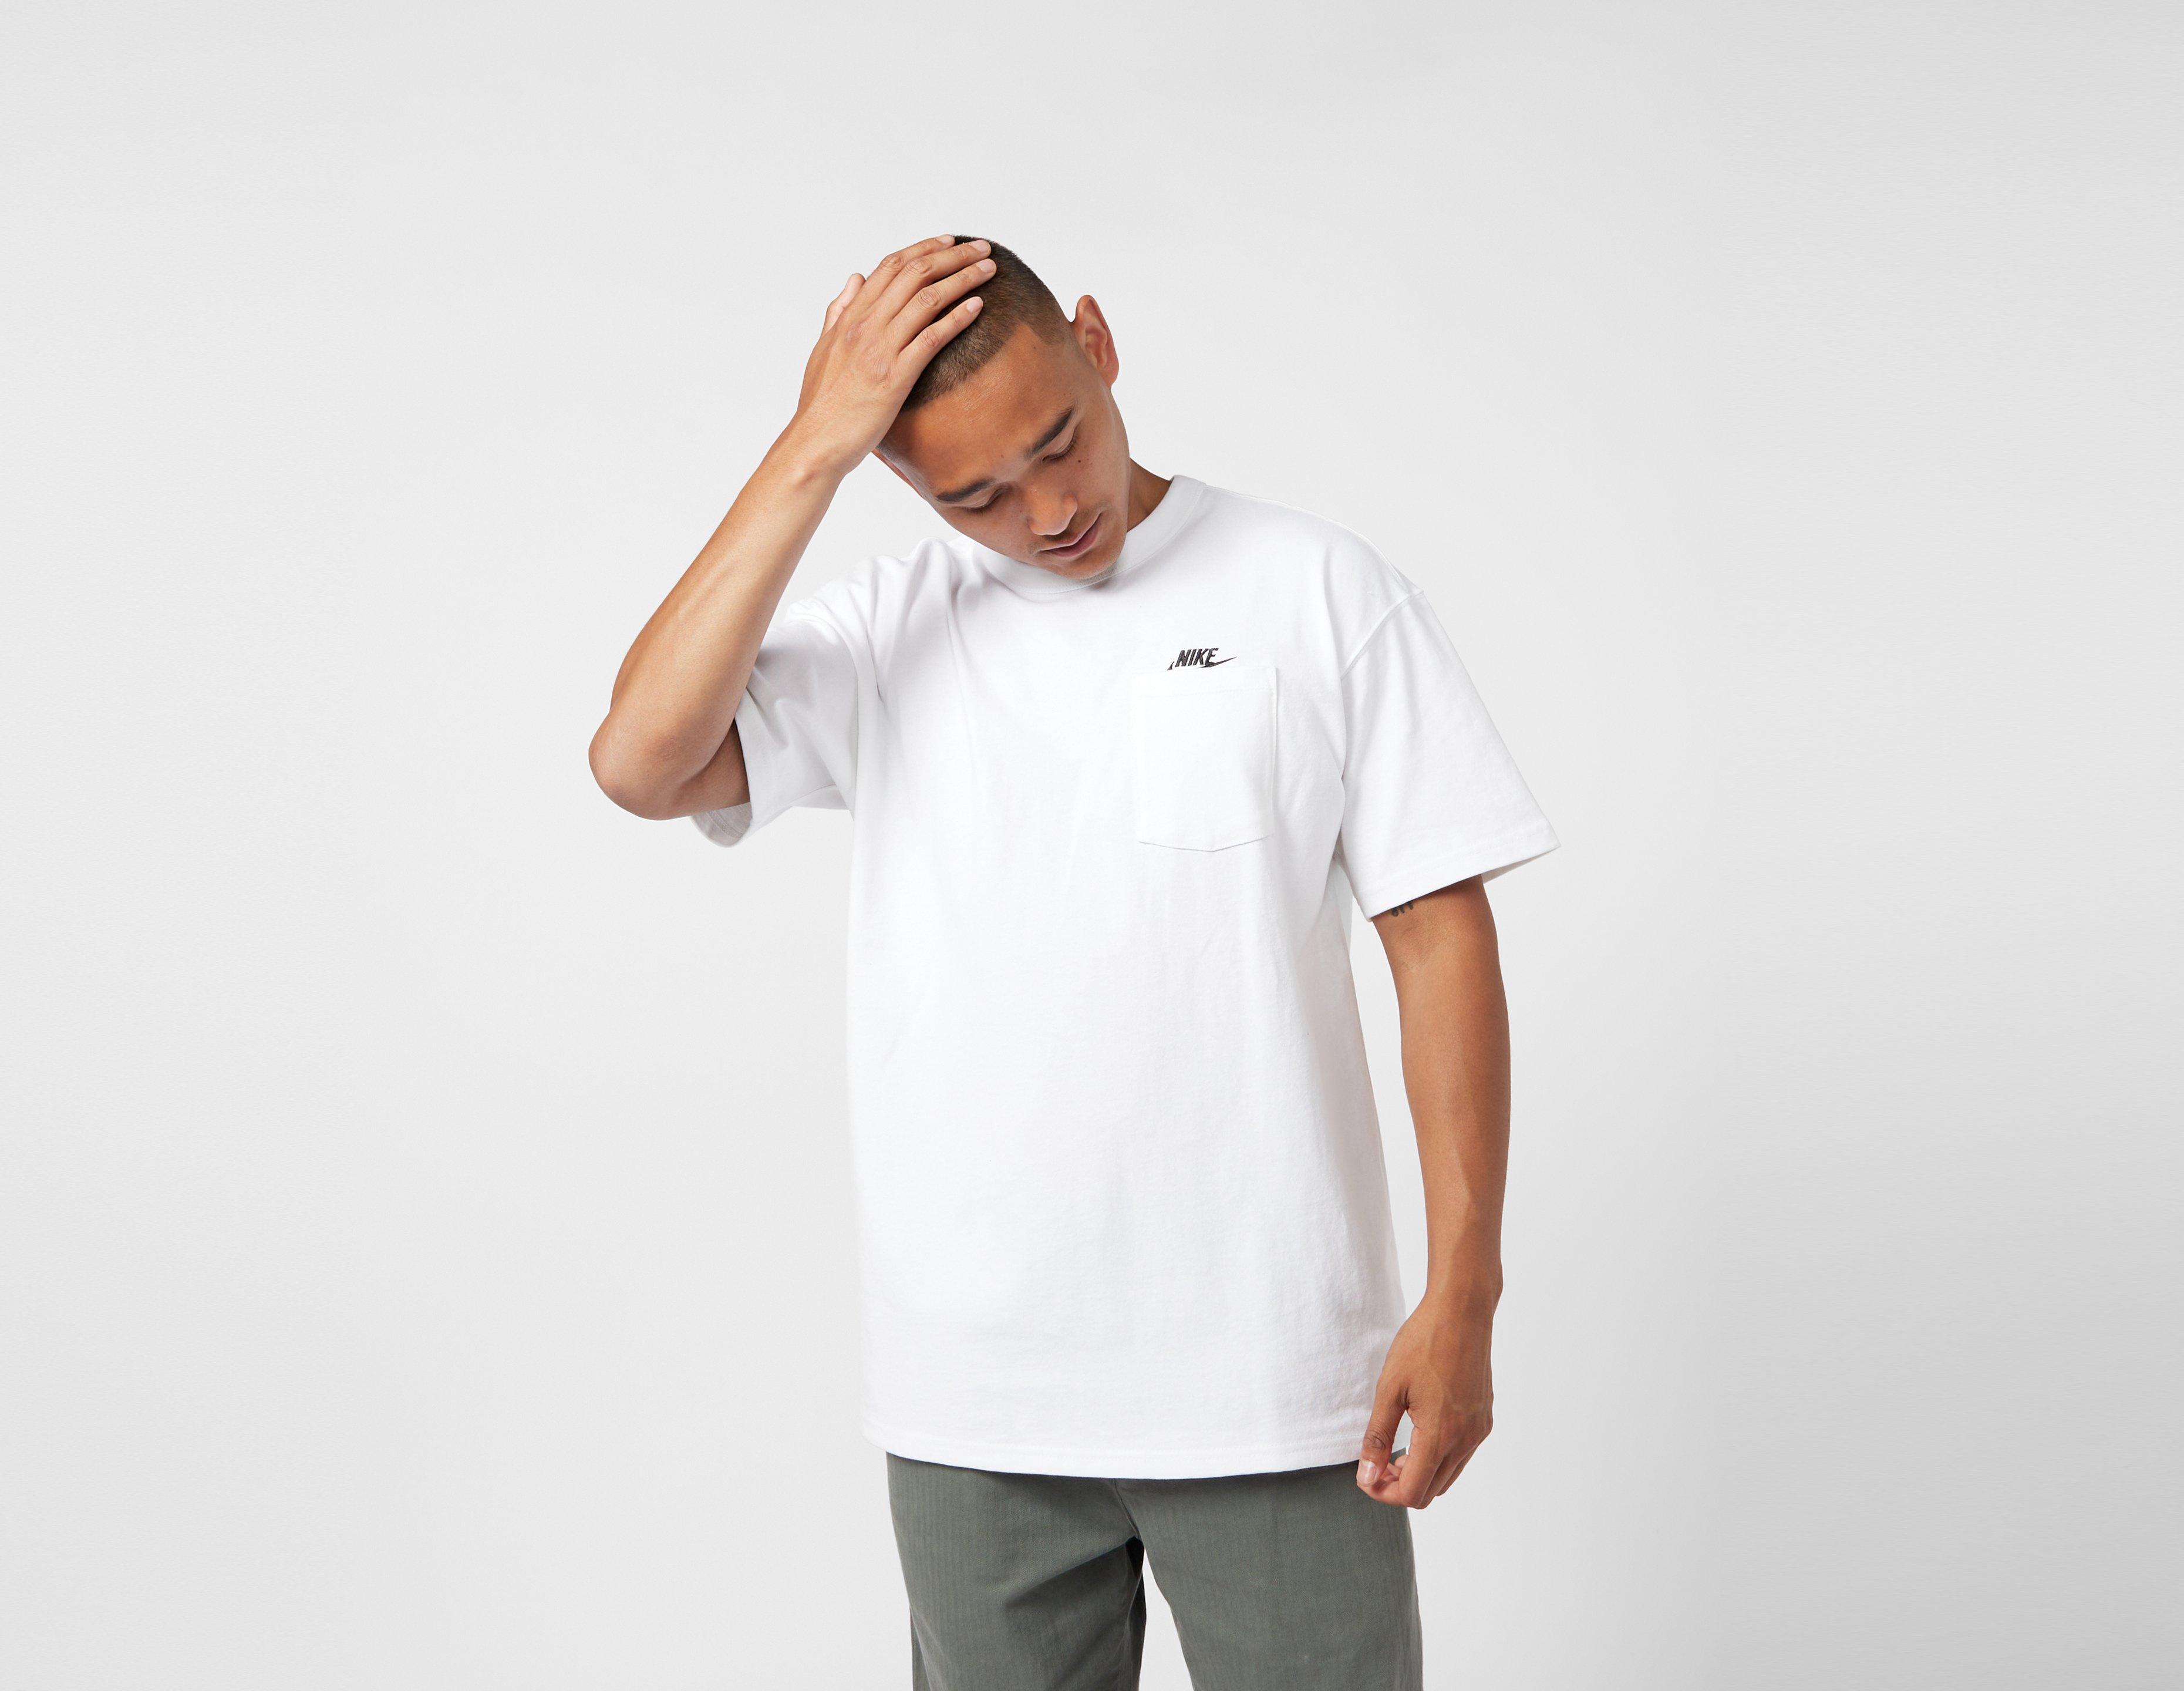 owner - NSW Essentials sale Shirt by air White Healthdesign? for T Nike advantage Pocket - | Premium vapour nike